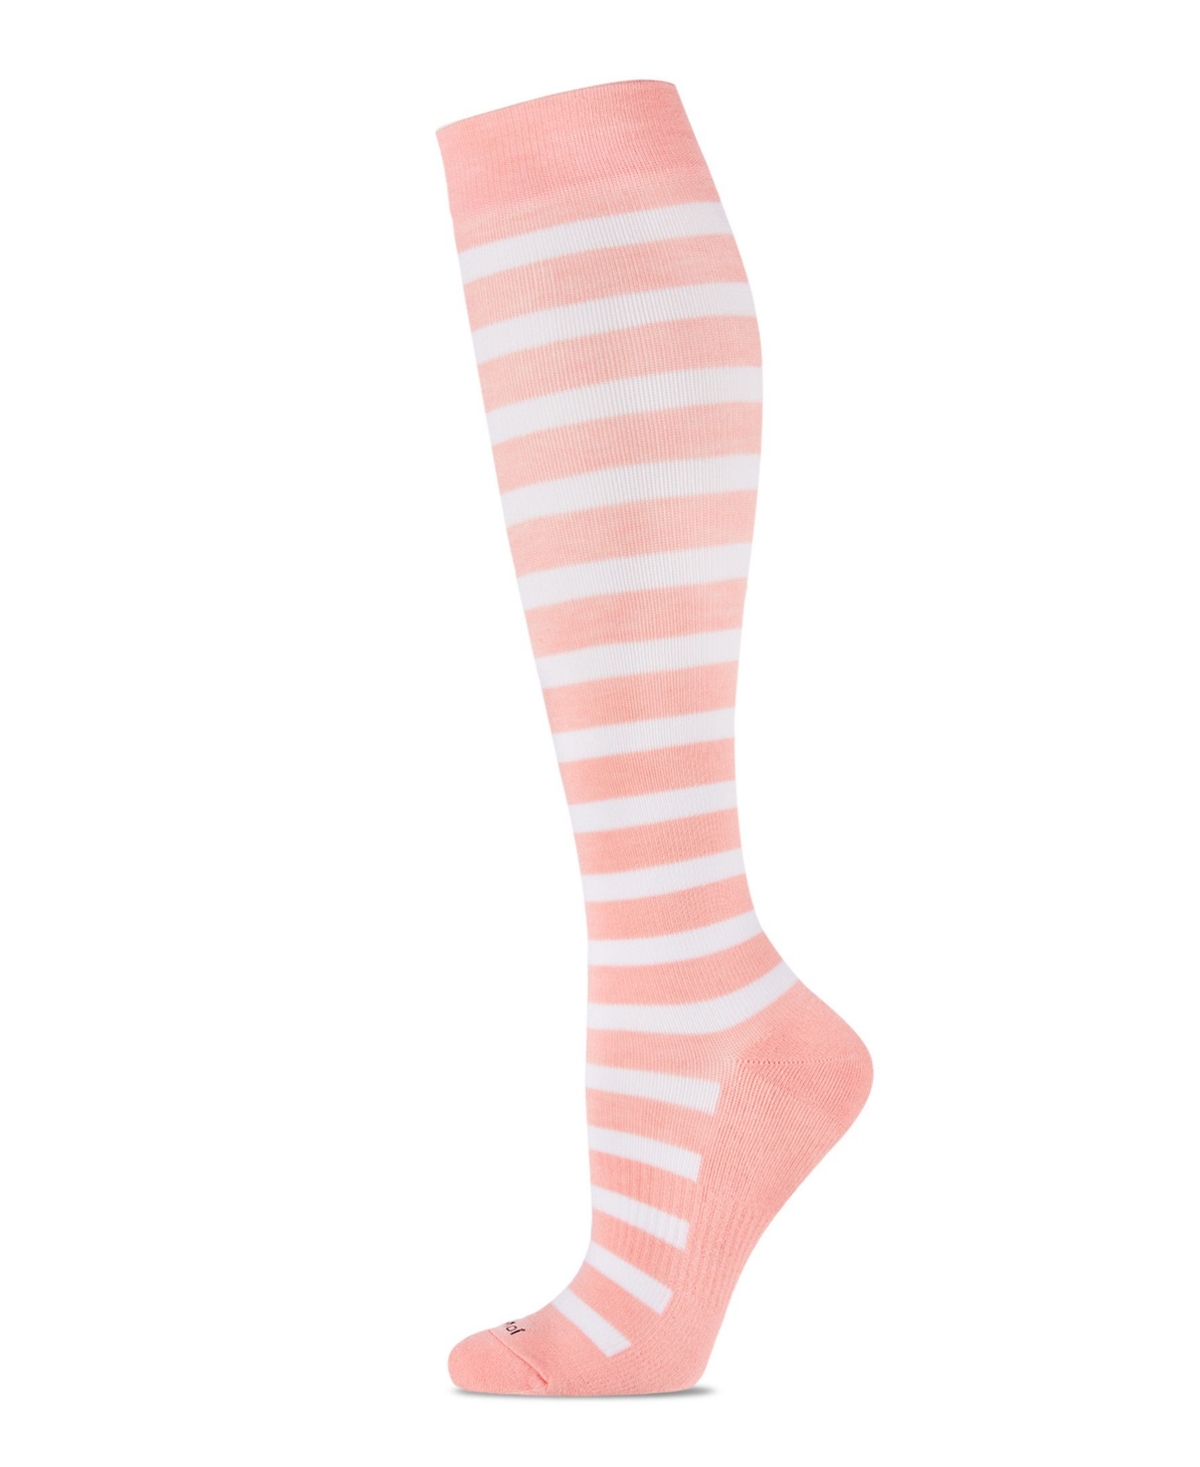 Cabana Stripe Women's Compression Socks - Pink